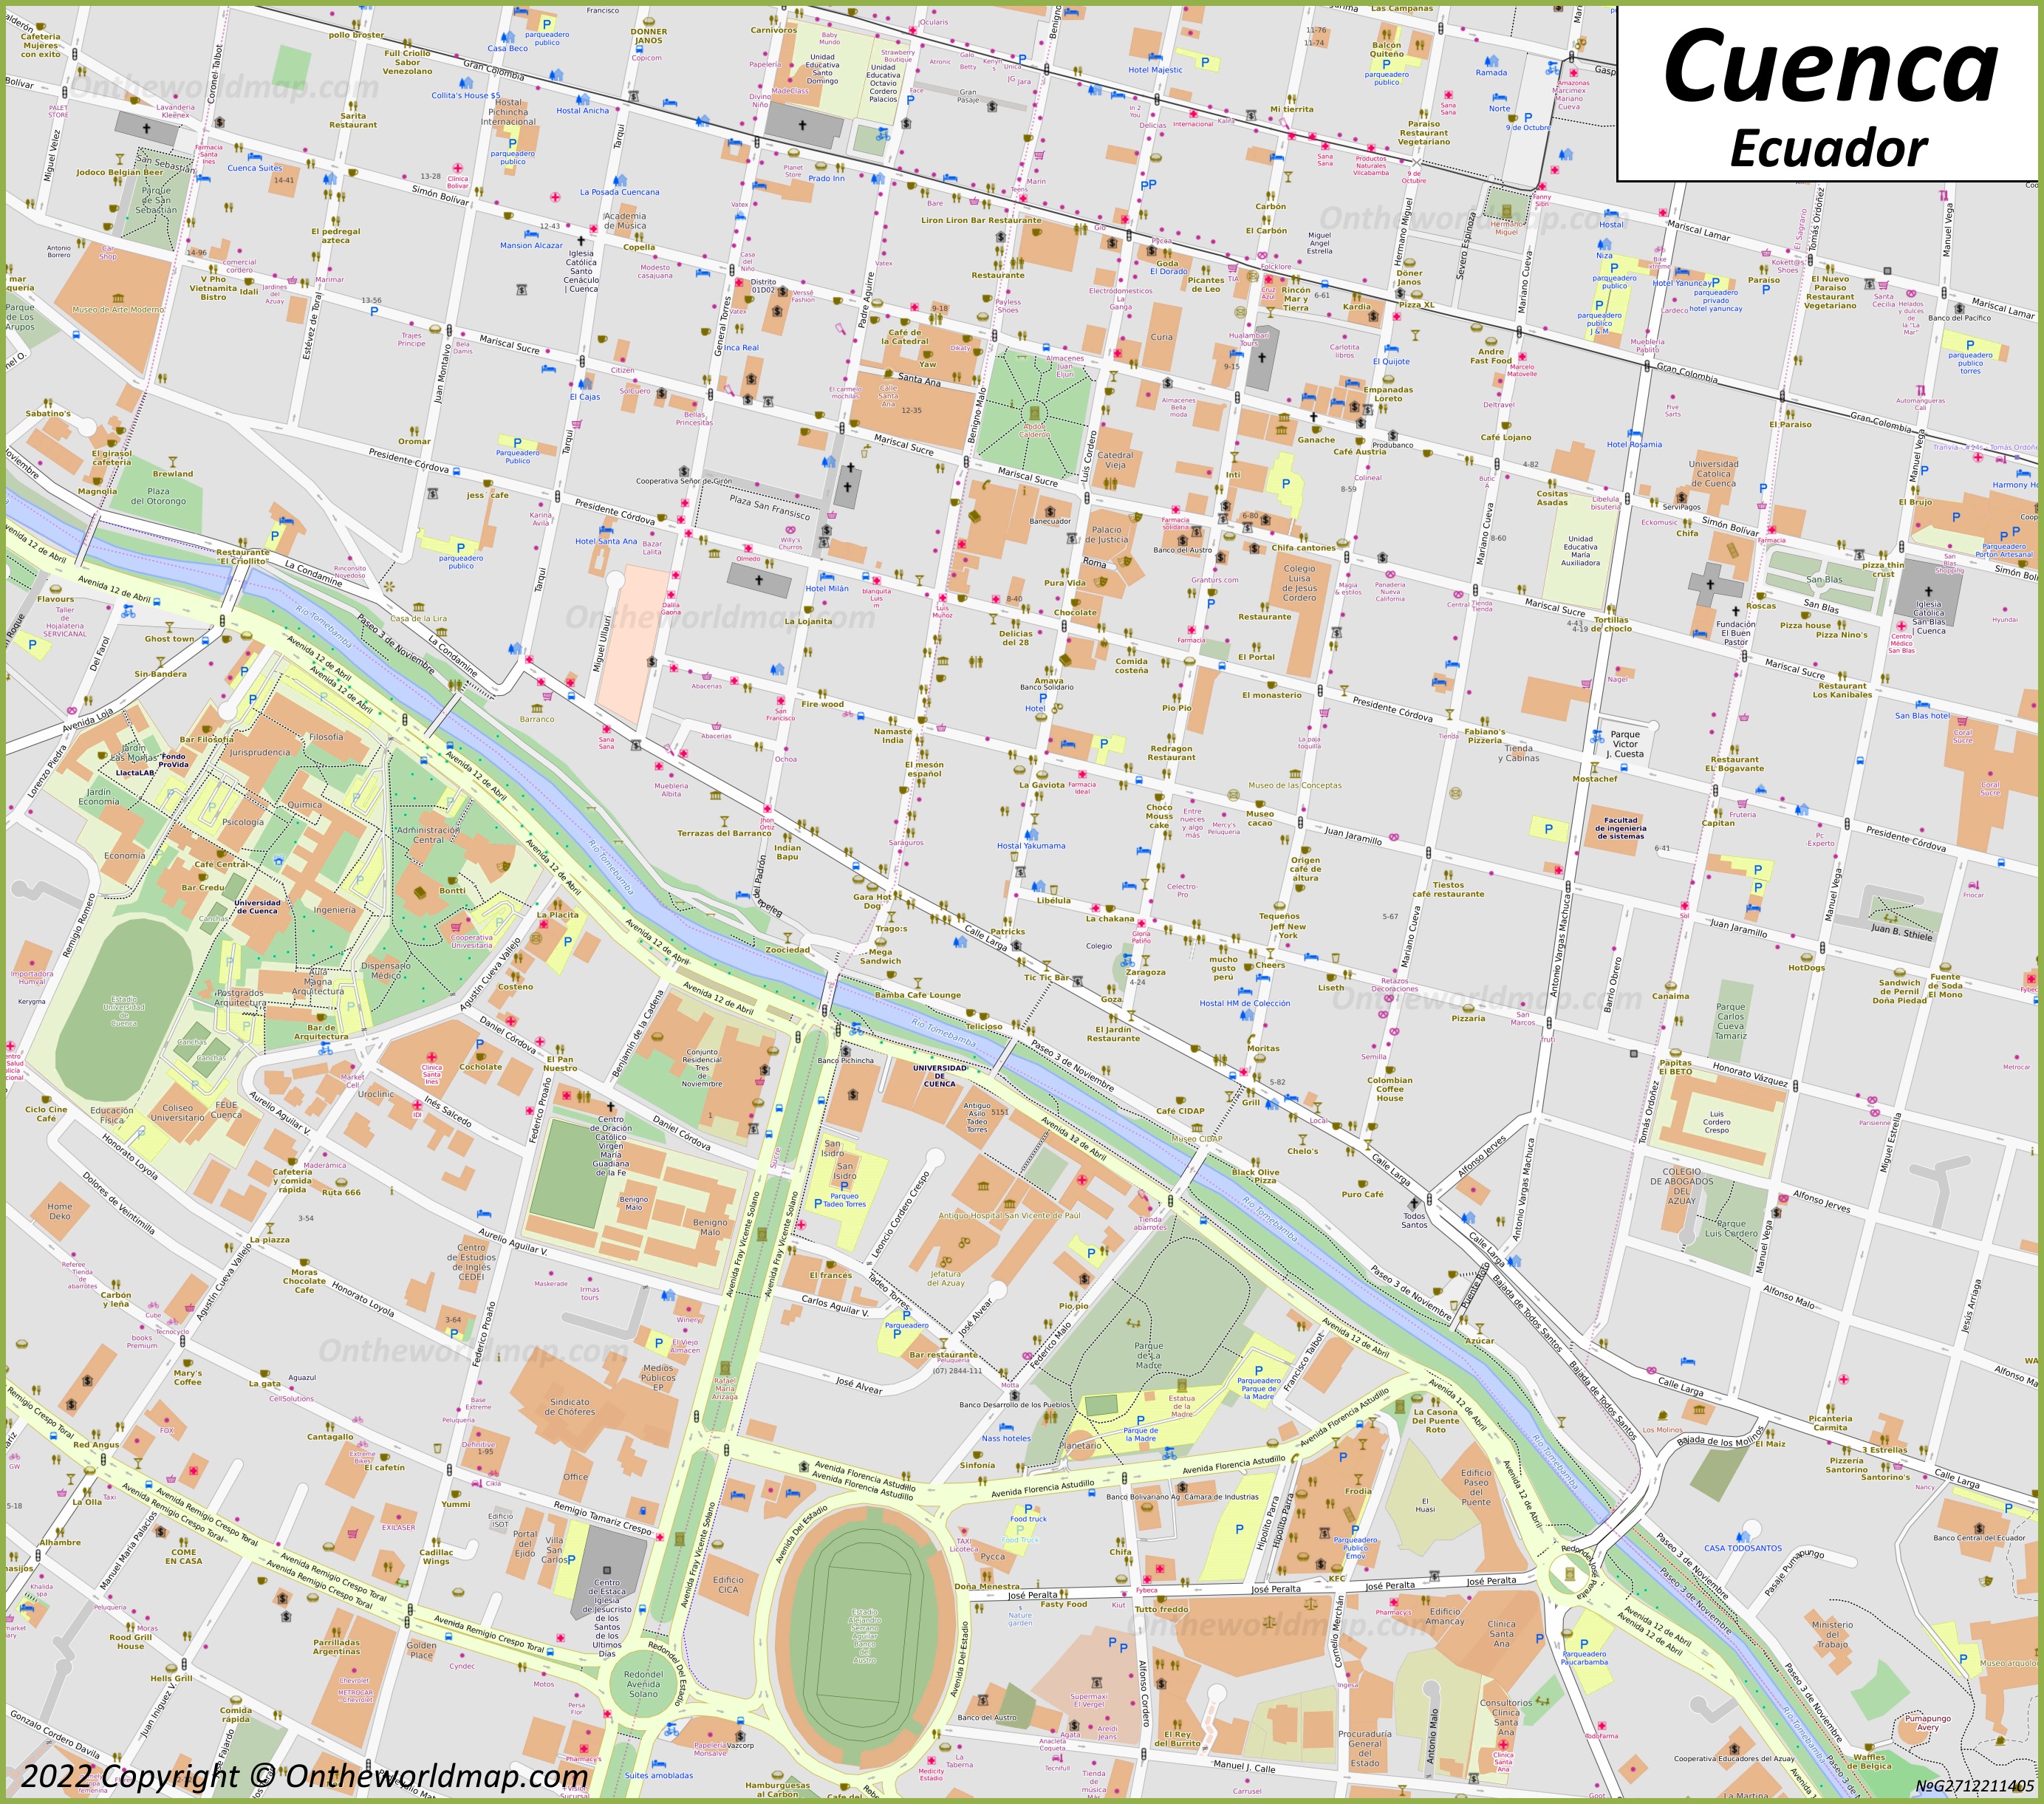 Cuenca City Centre Map